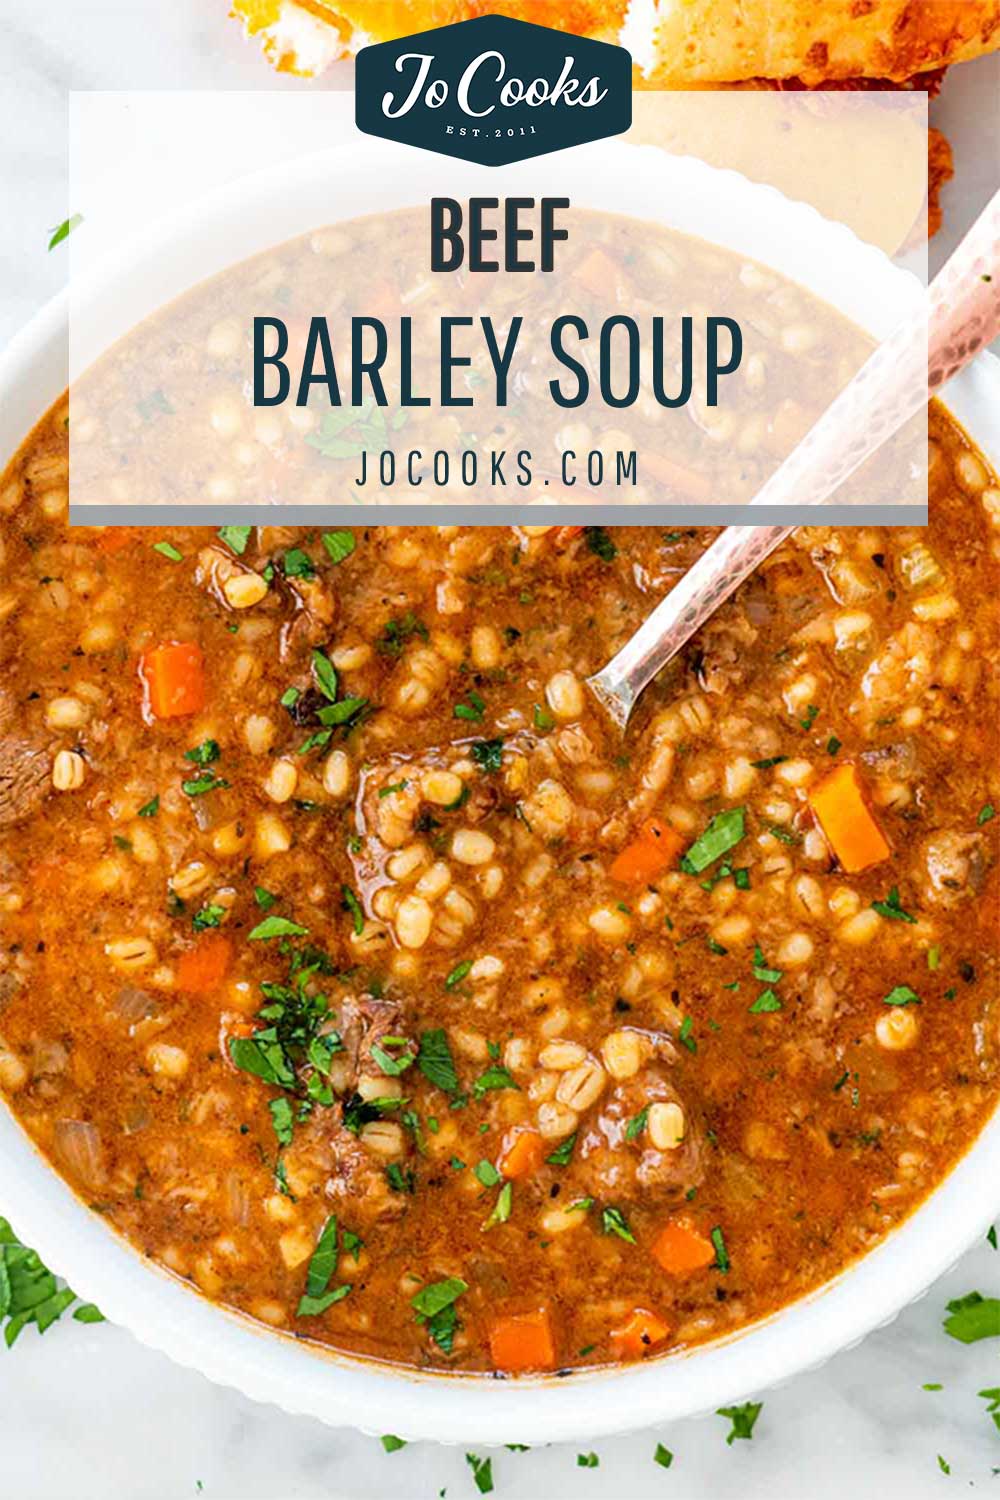 https://www.jocooks.com/wp-content/uploads/2018/11/beef-barley-soup.jpg